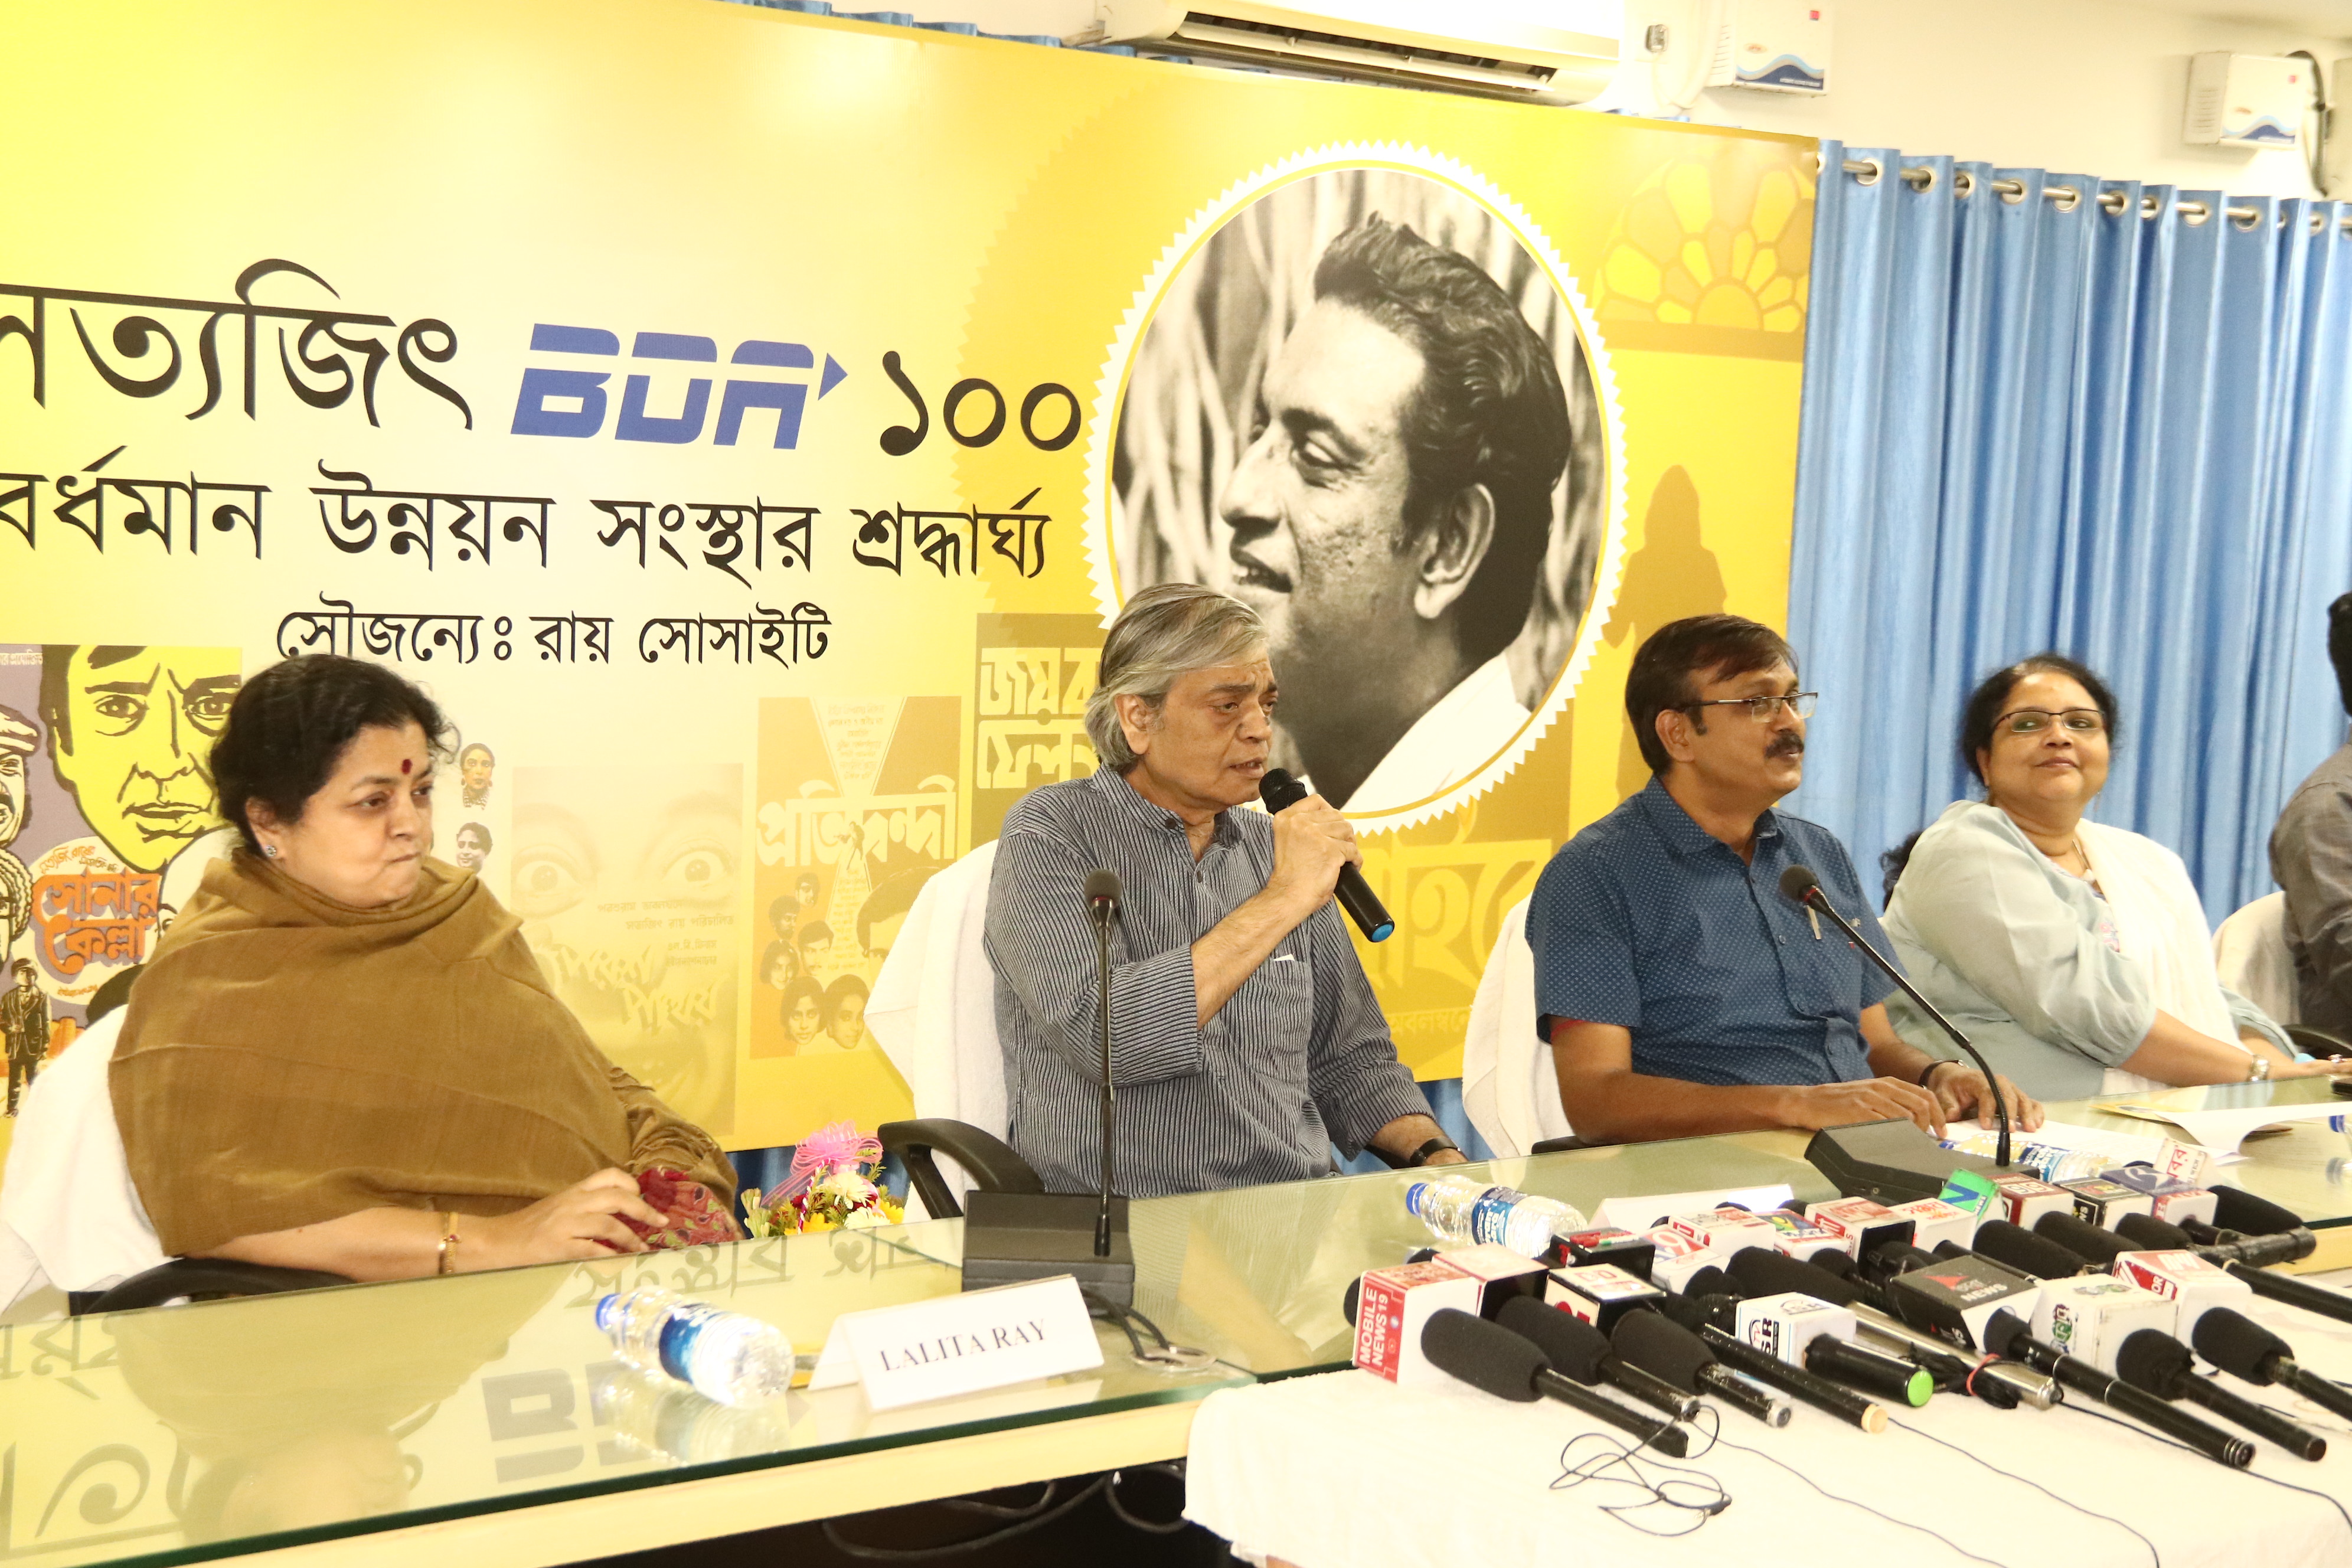 BDA's venture to celebrate the occasion of the birth centenary of Shri Satyajit Ray5